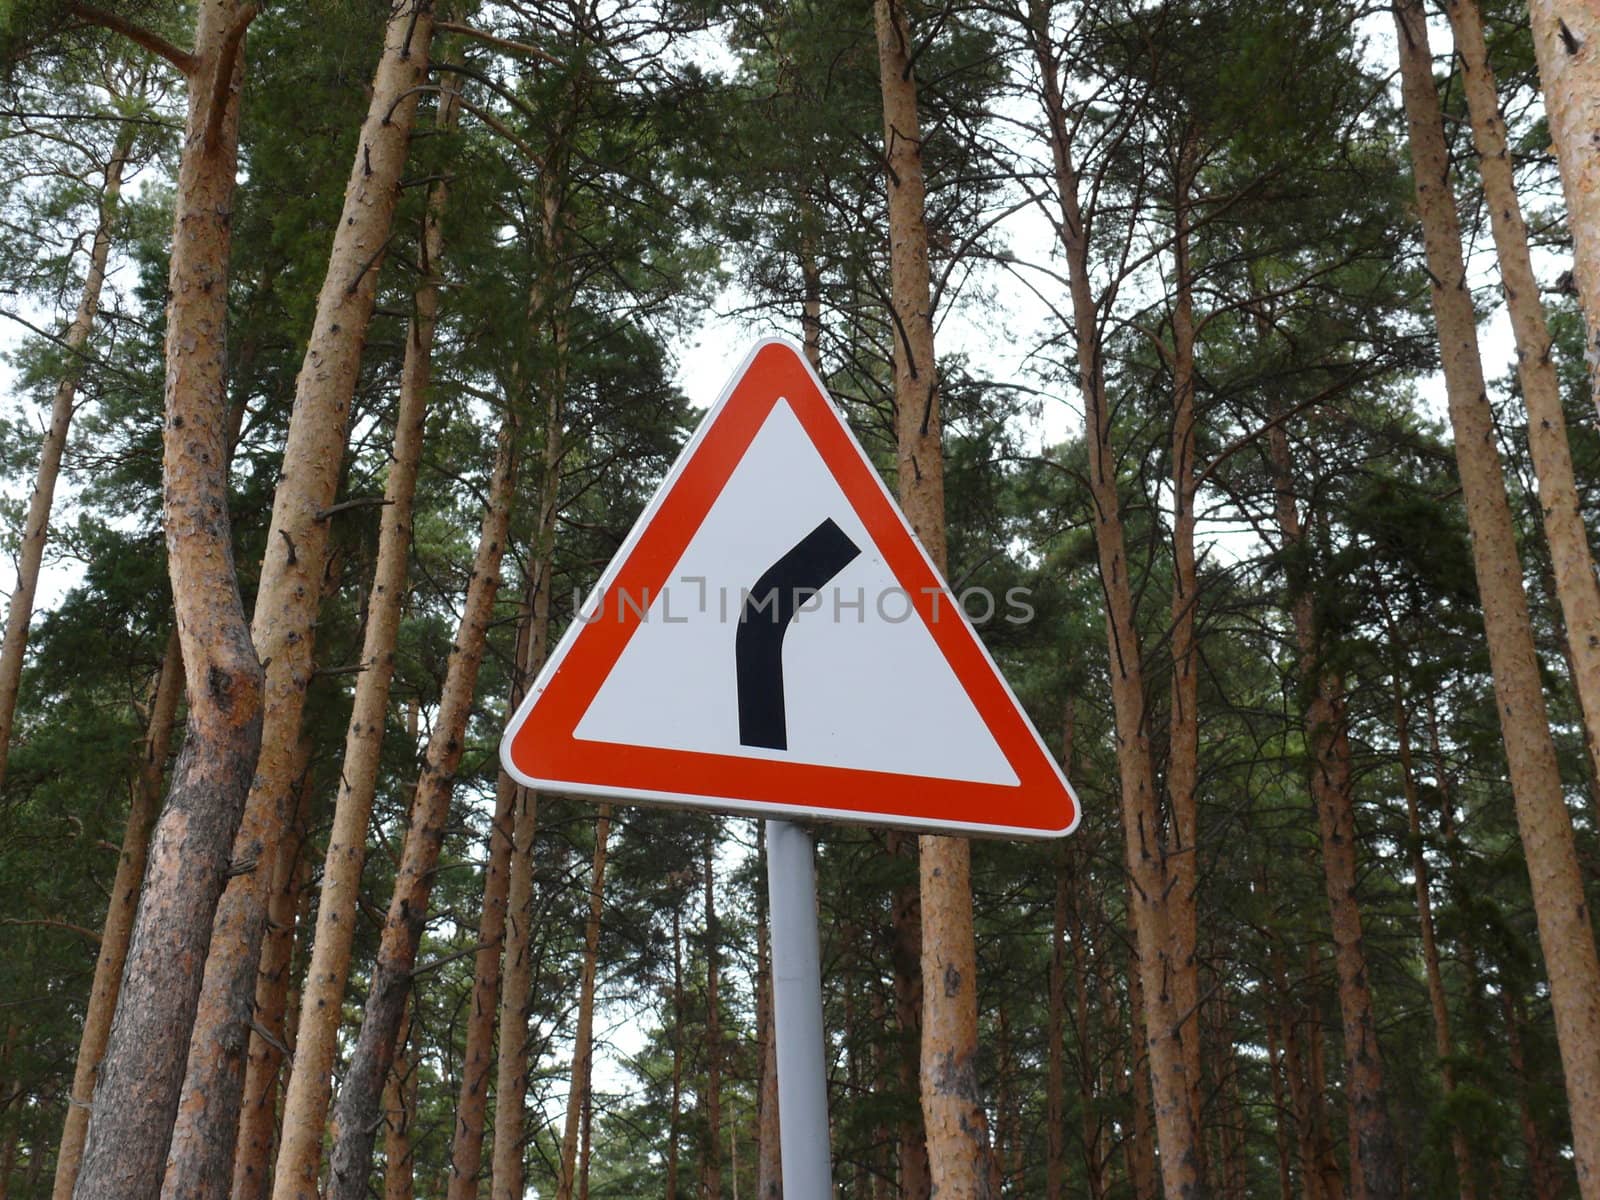 Traffic sign "Dangerous turn" by Stoyanov